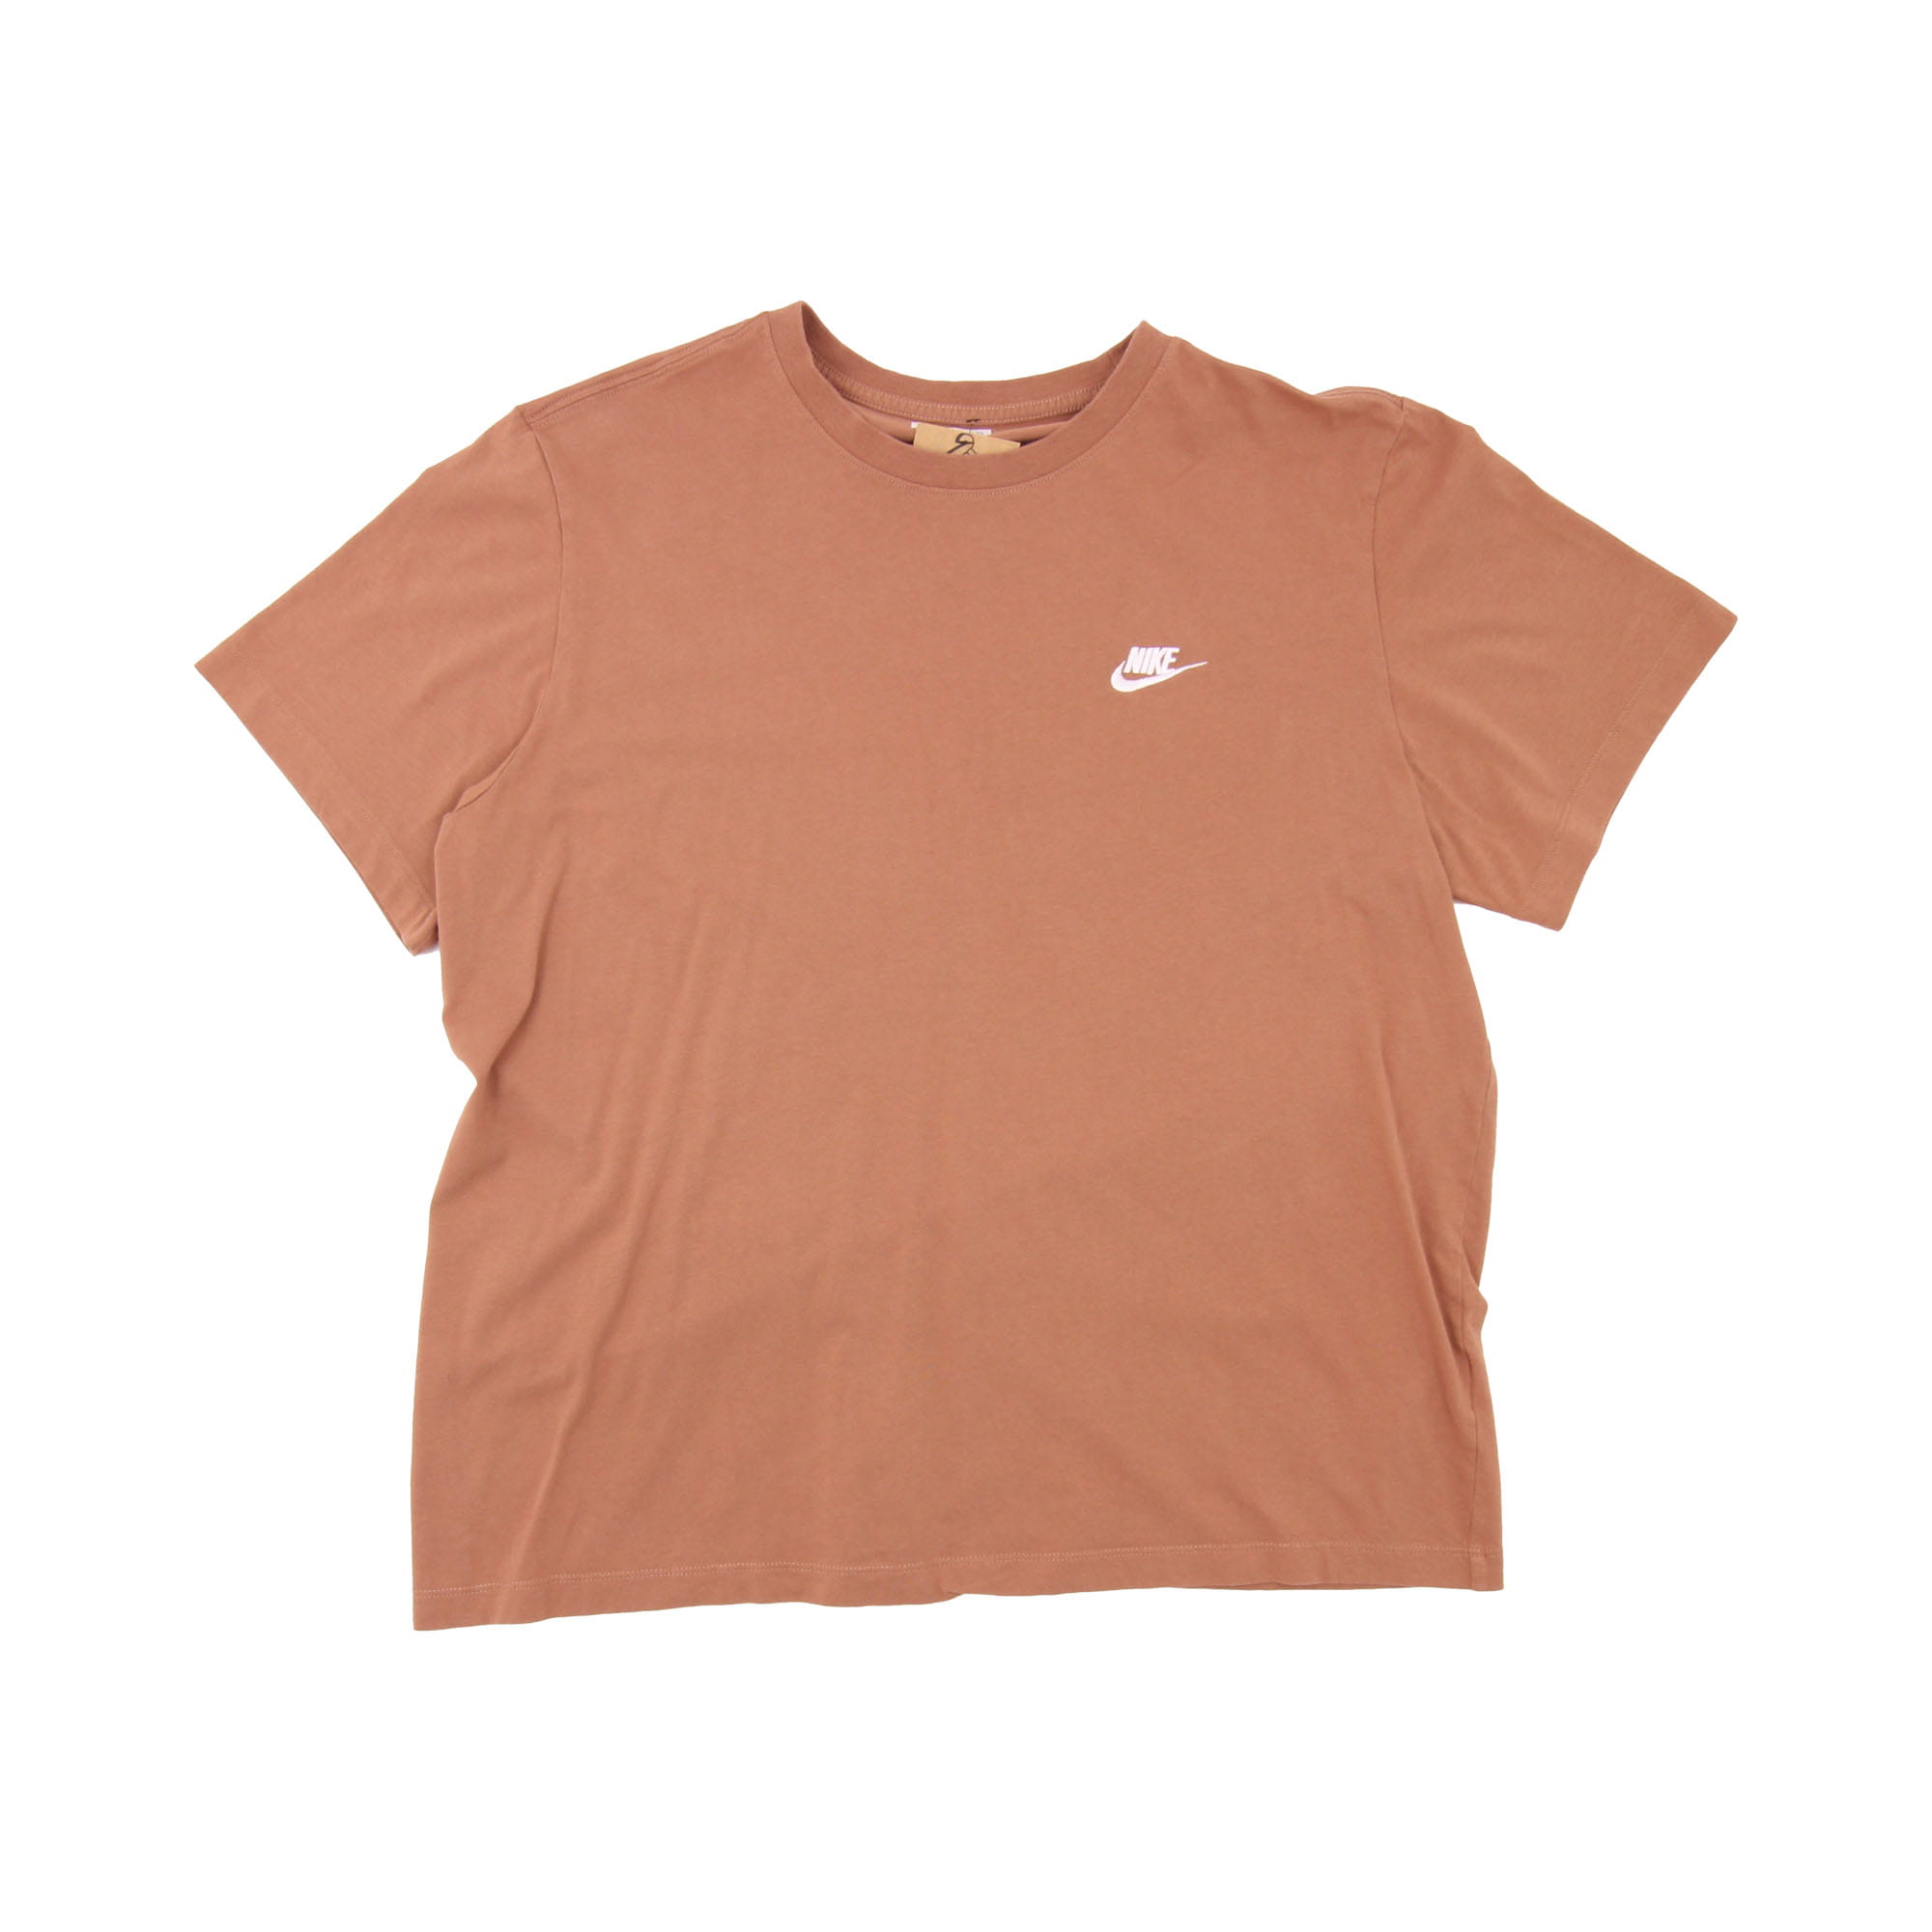 Nike T-Shirt Brown -  L